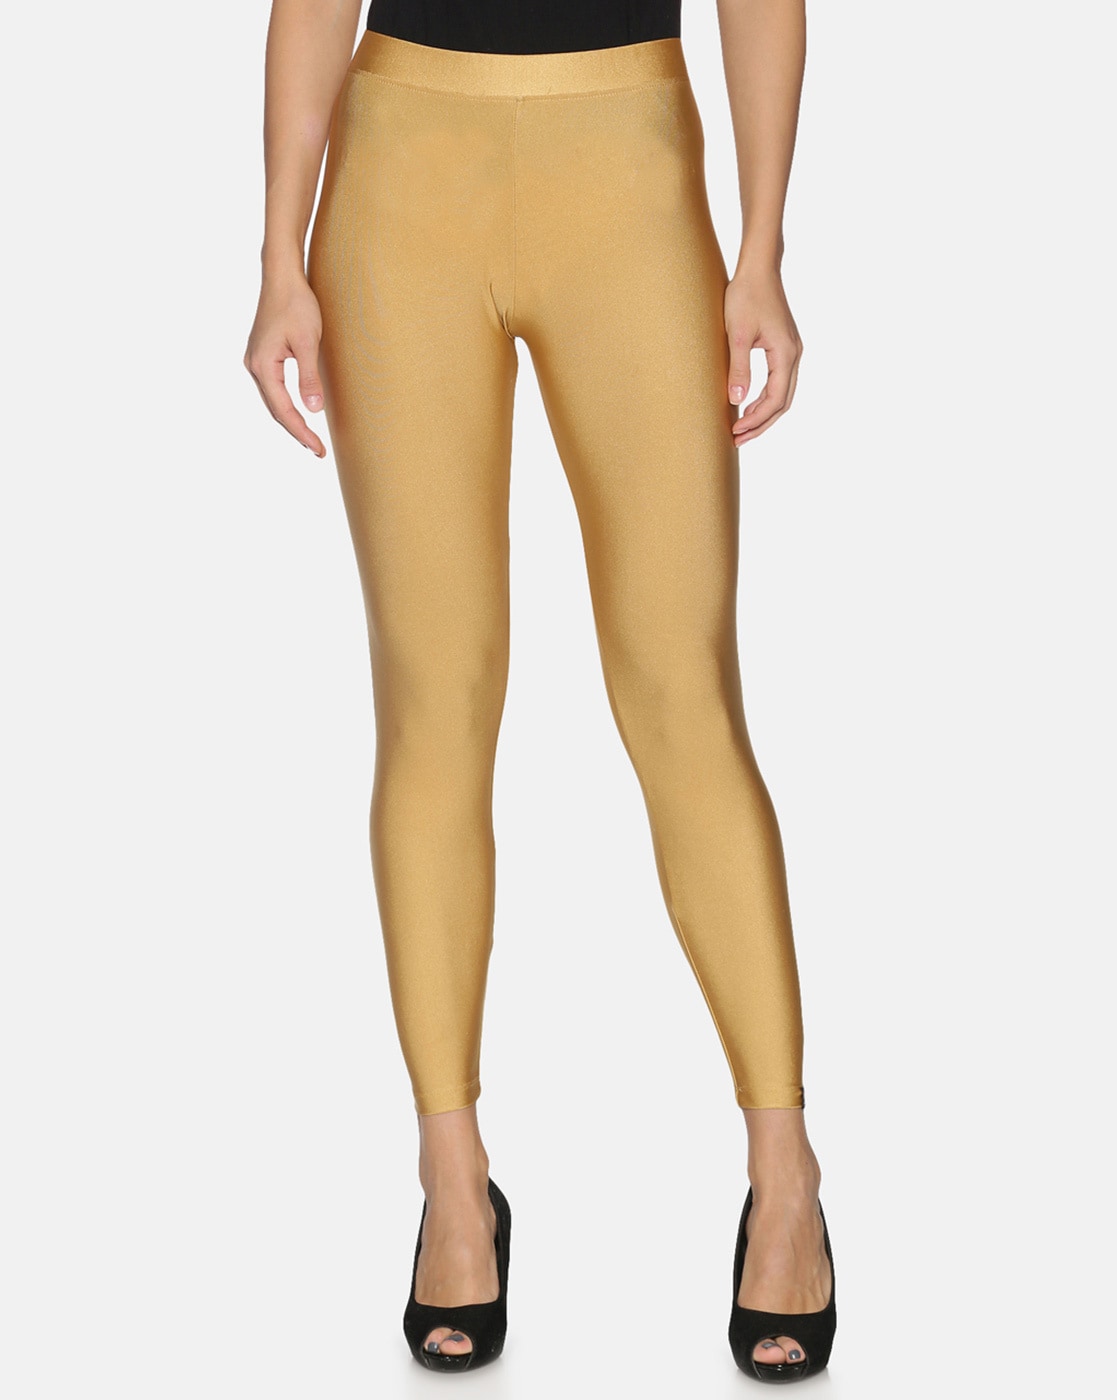 Explore more than 133 gold leggings womens best